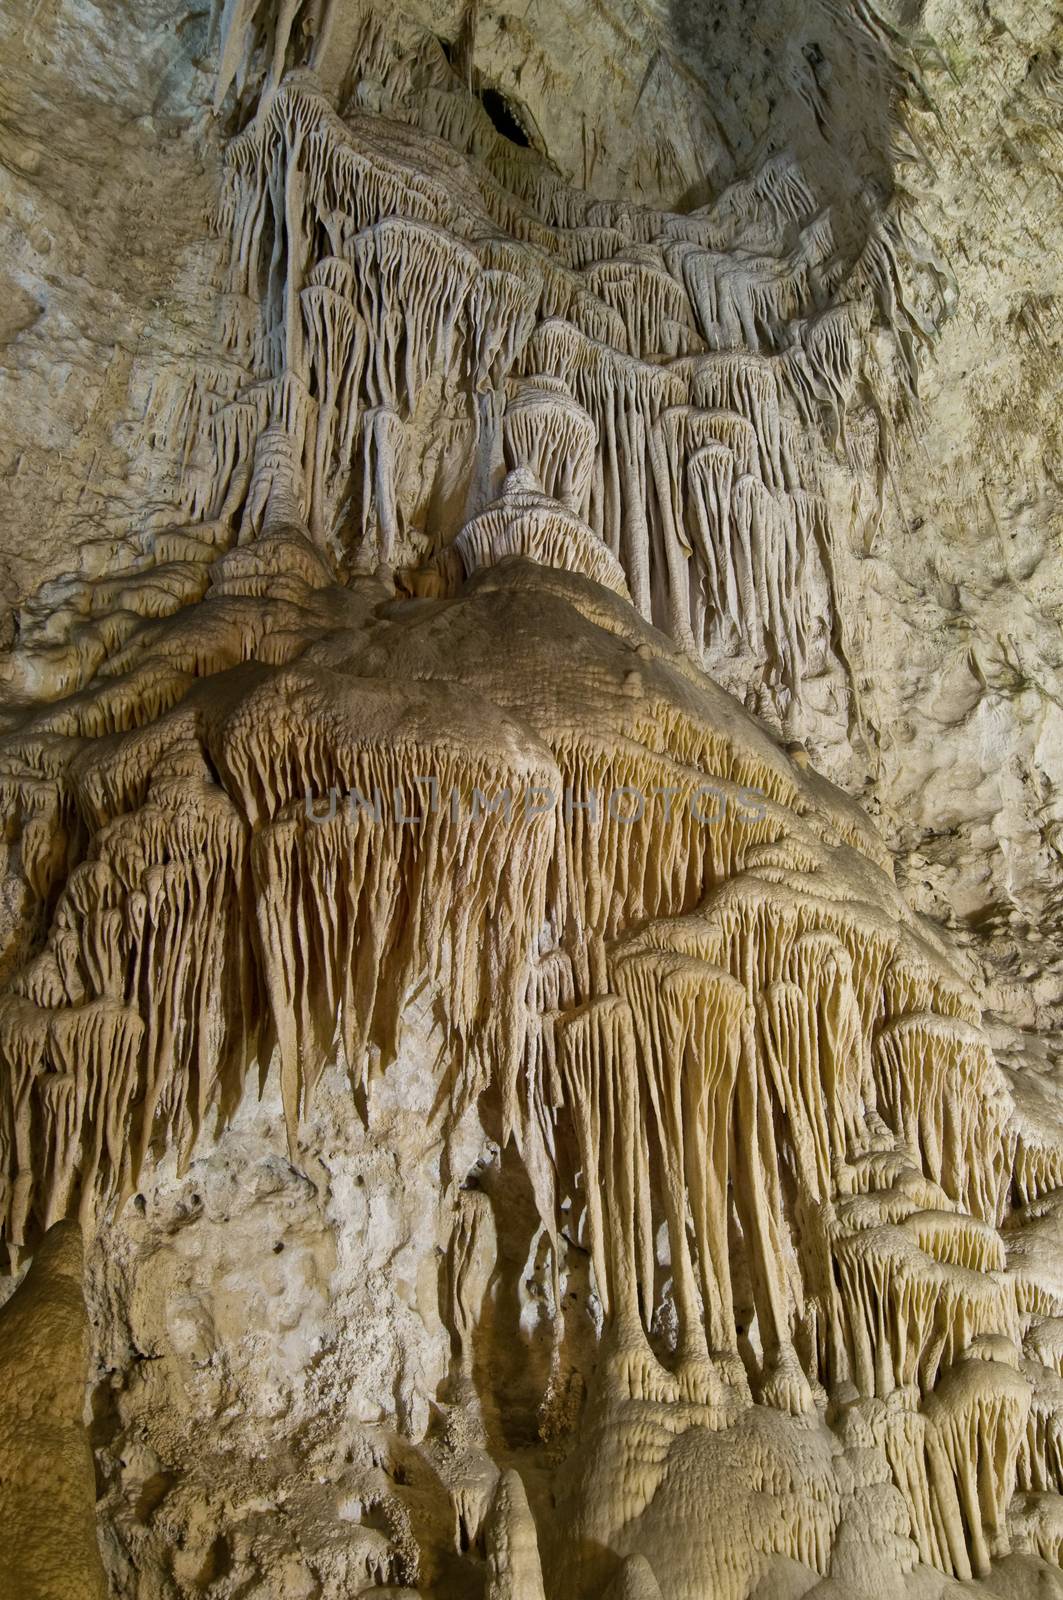 Draperies in Carlsbad Caverns, NM by Njean